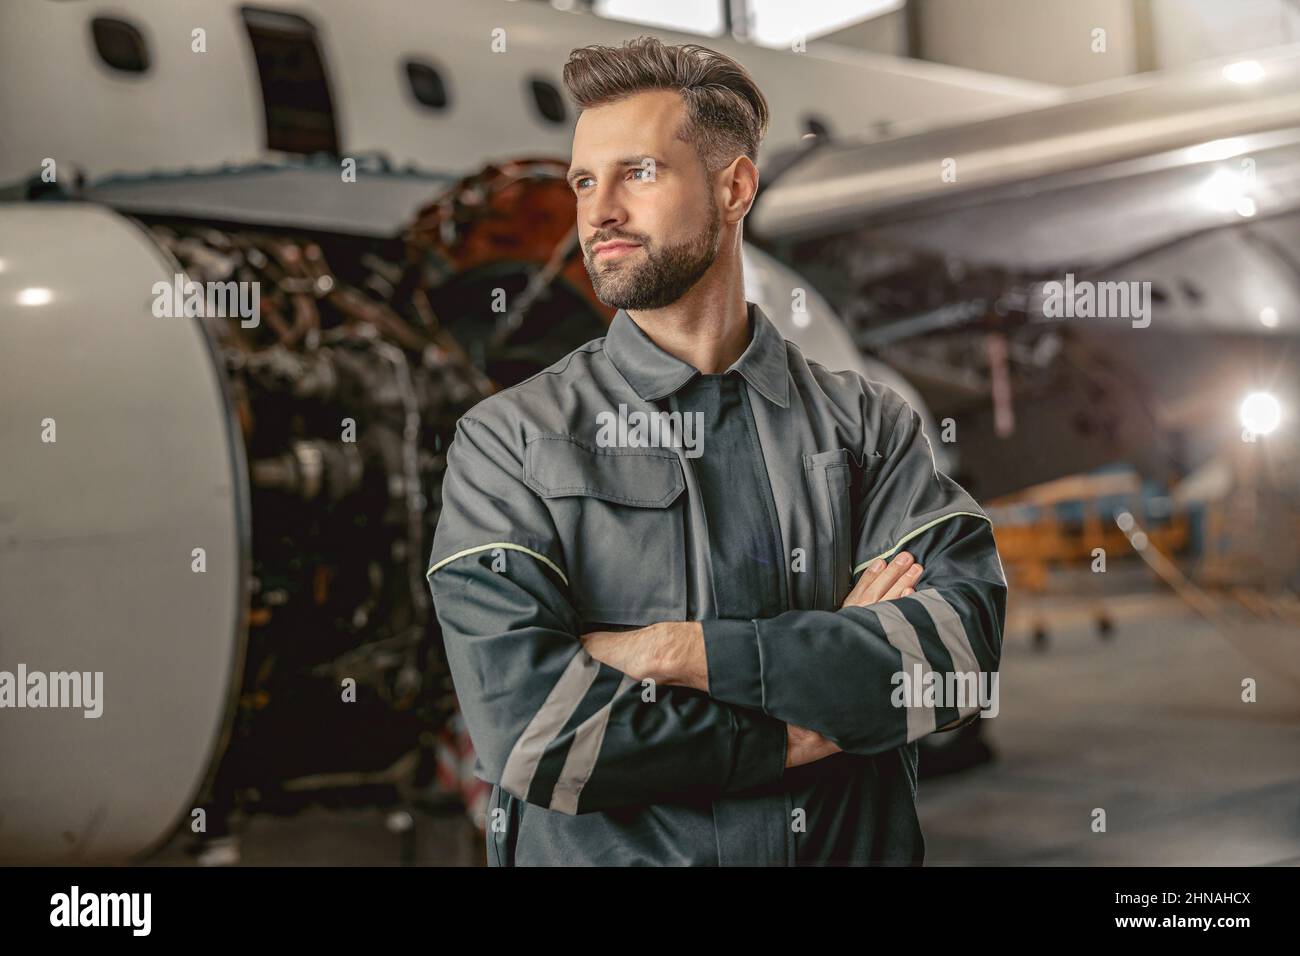 Bearded man aircraft maintenance engineer standing in hangar Stock Photo